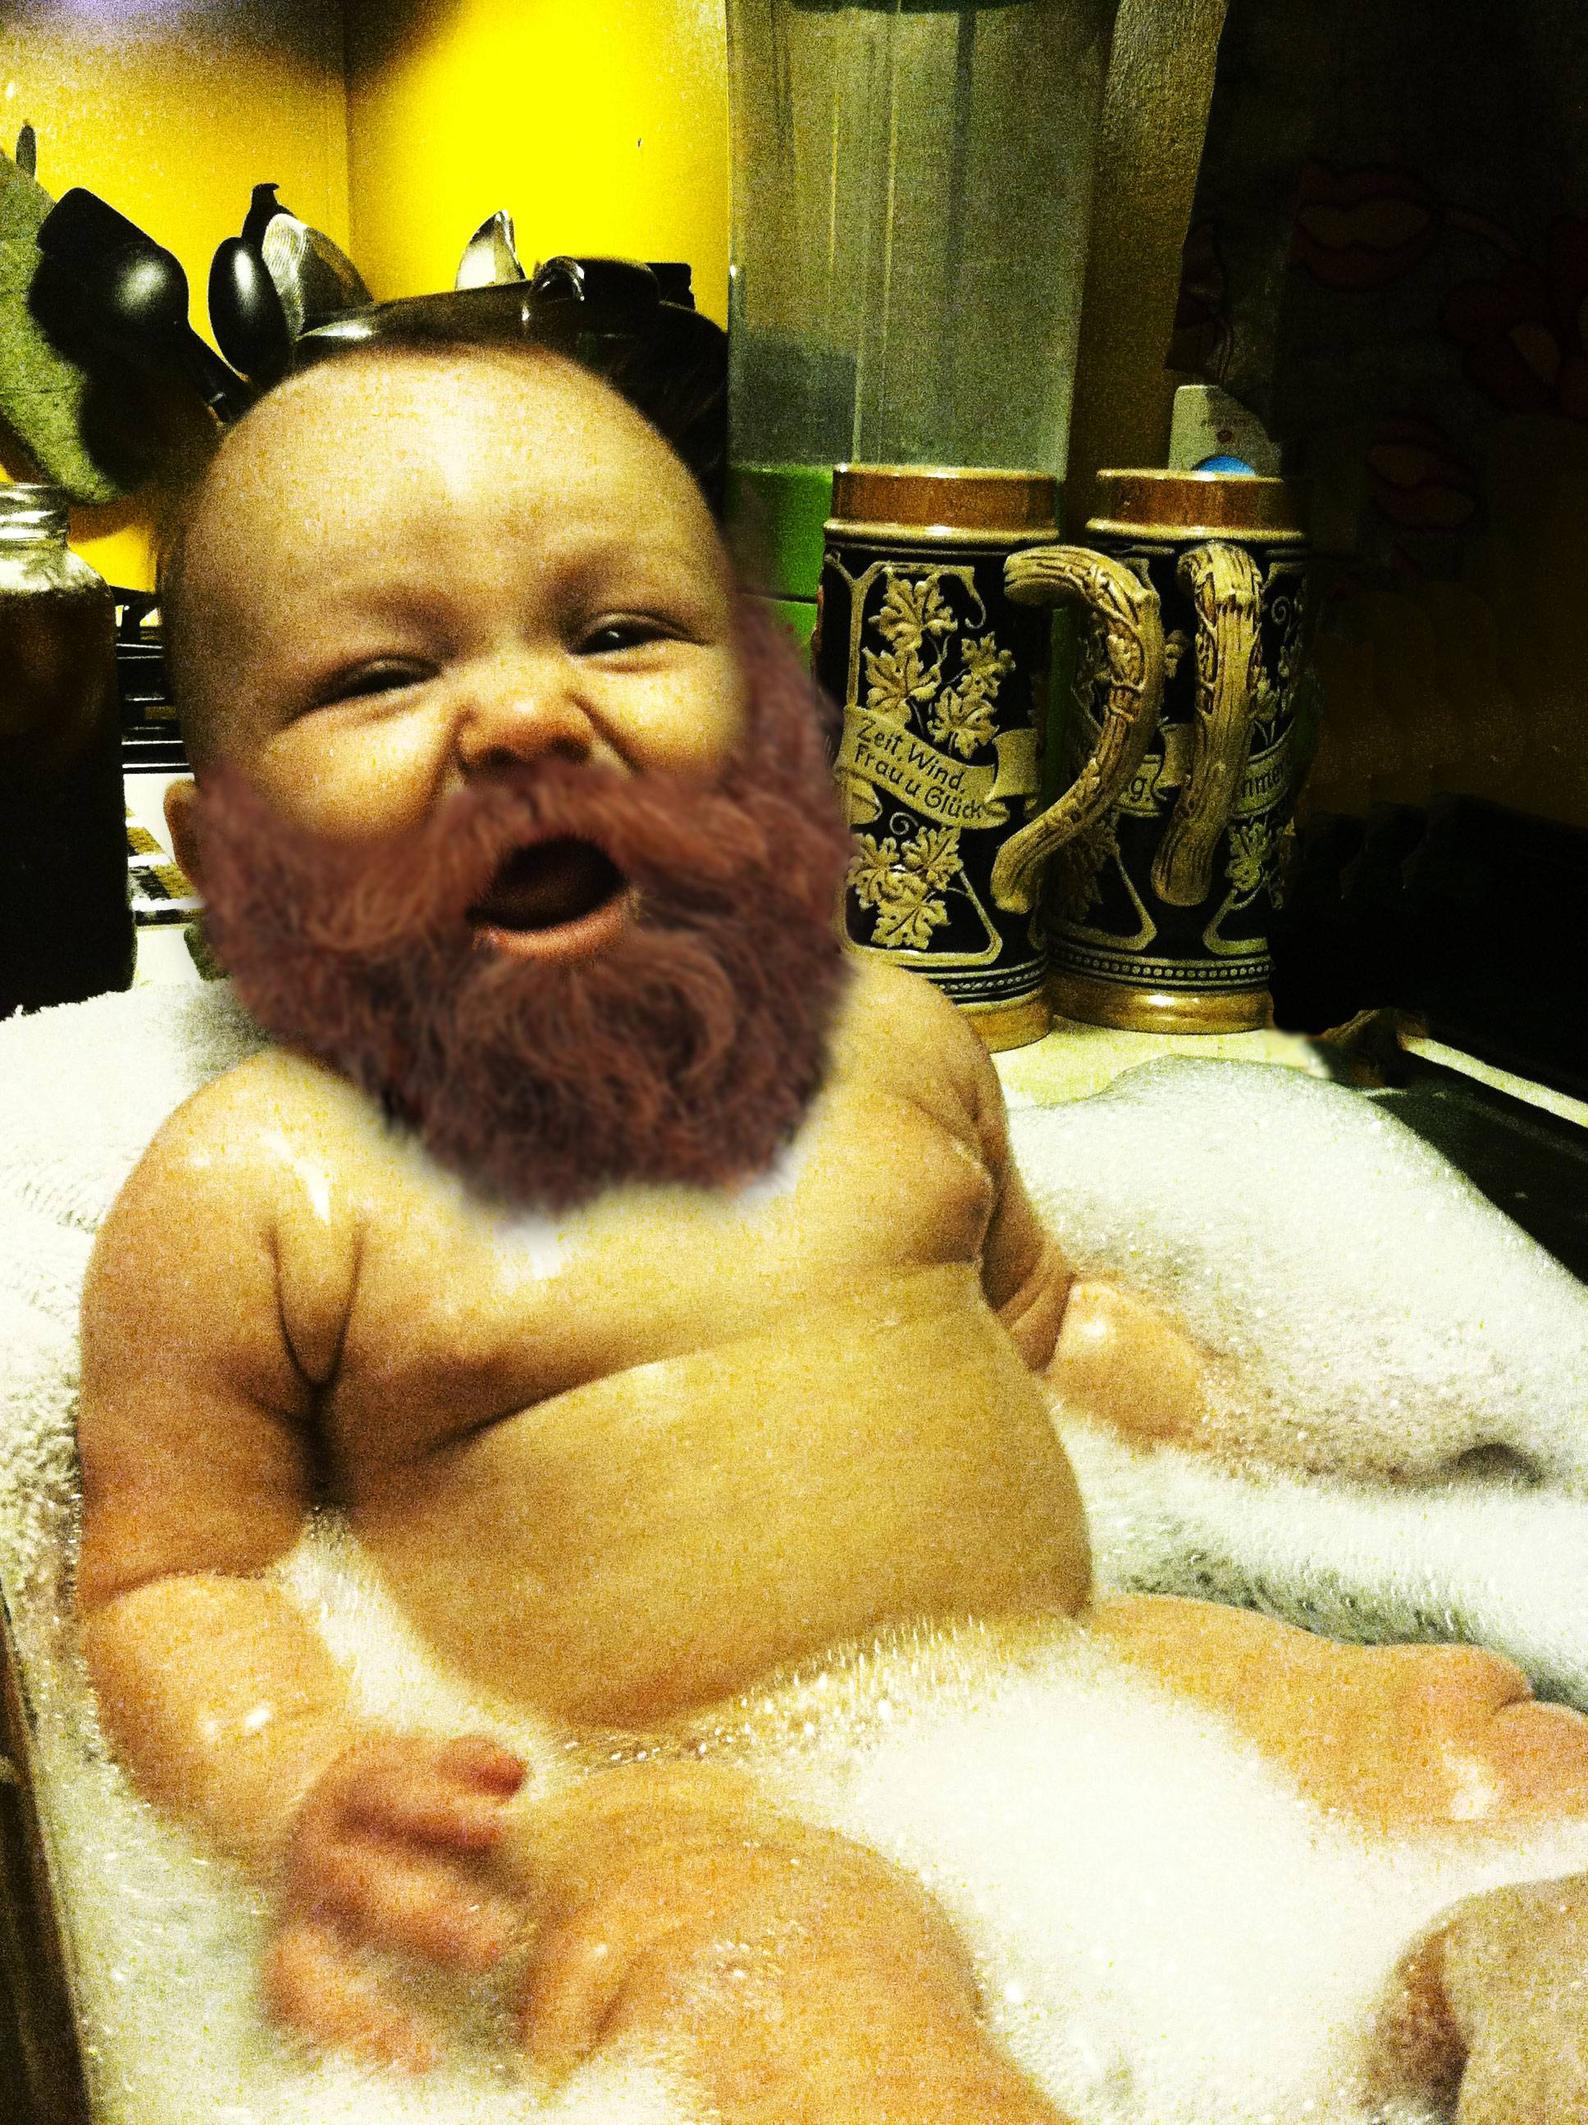 Bearded baby photoshop prank